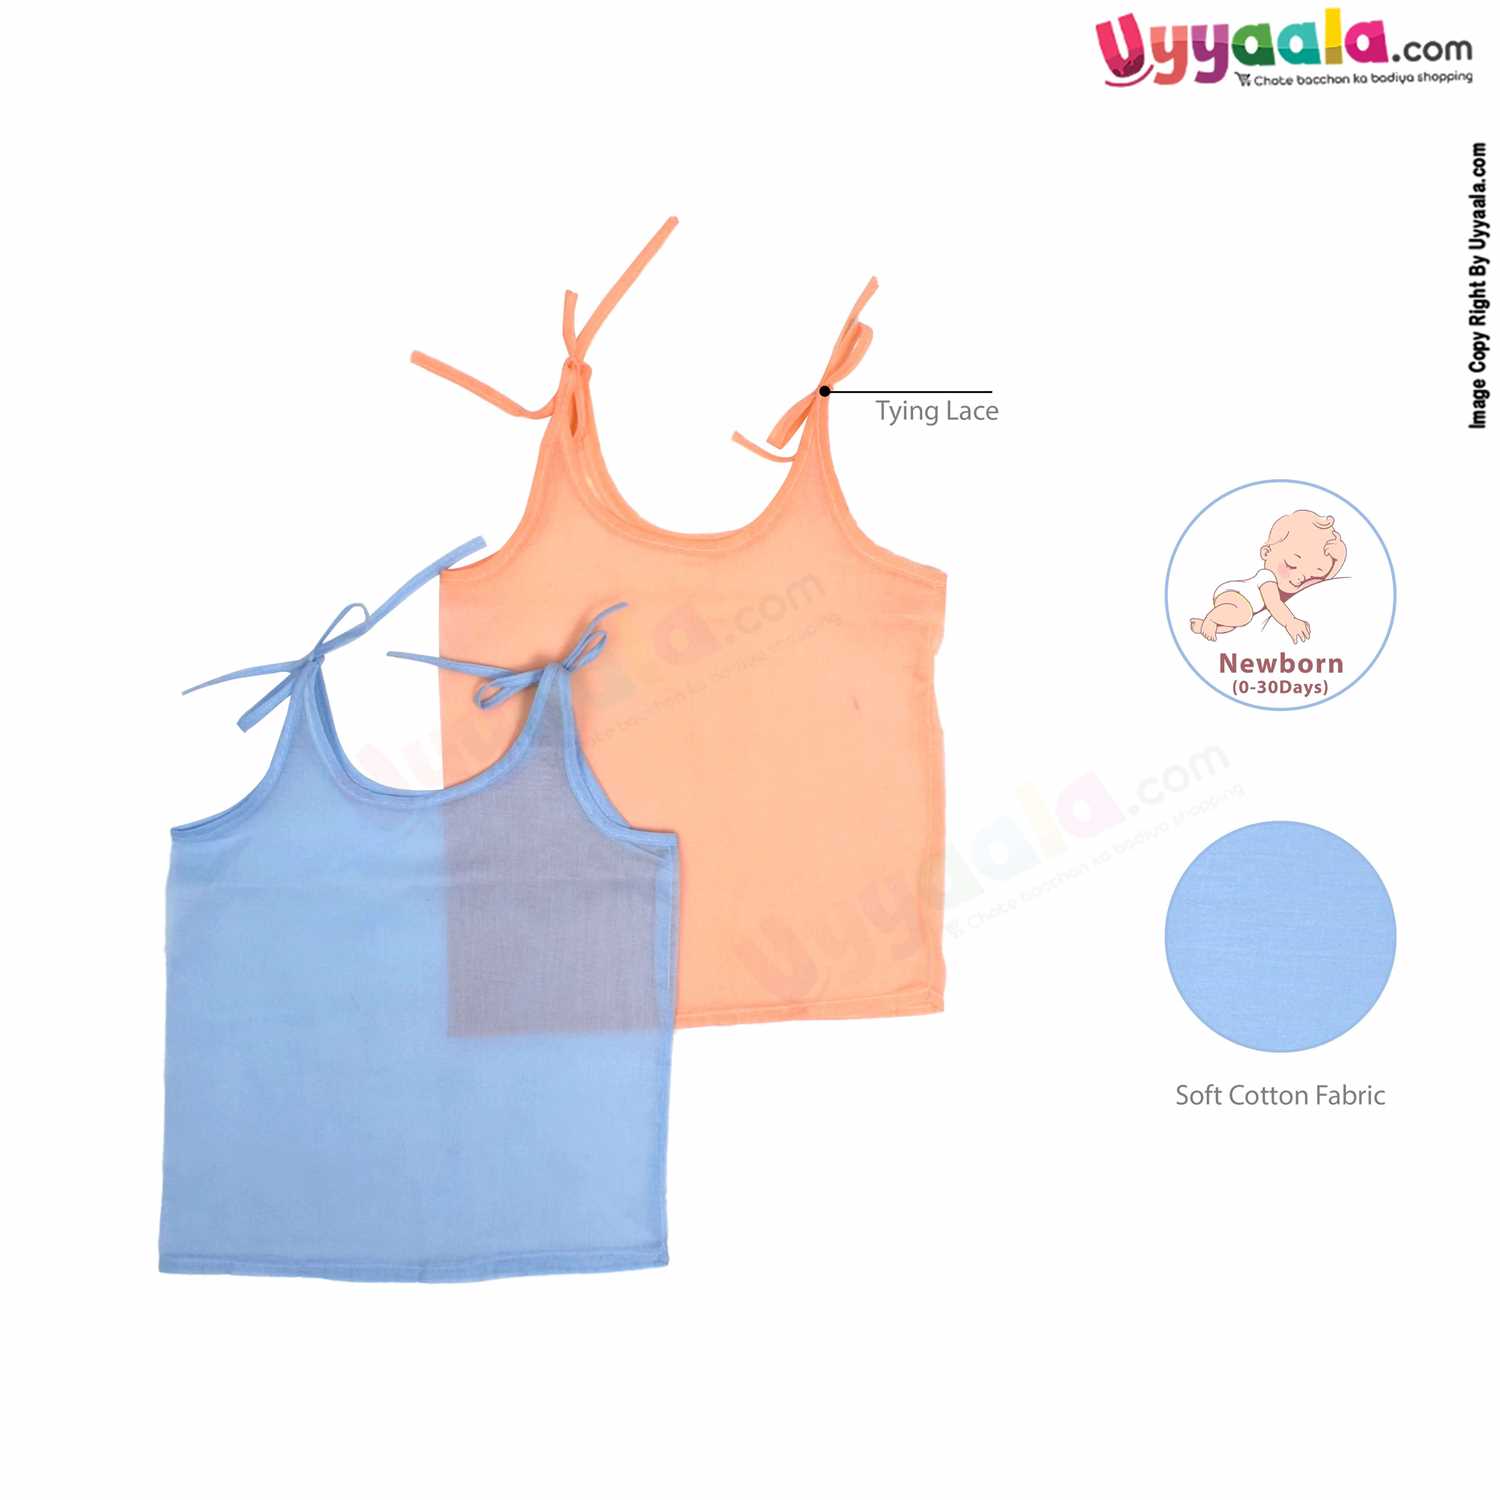 SNUG UP Sleeveless Baby Jabla Set, Top Opening Tie knot Lace Model, Premium Quality Cotton Baby Wear, Stripes Print, (0-30 Days), 2Pack - Blue & Orange